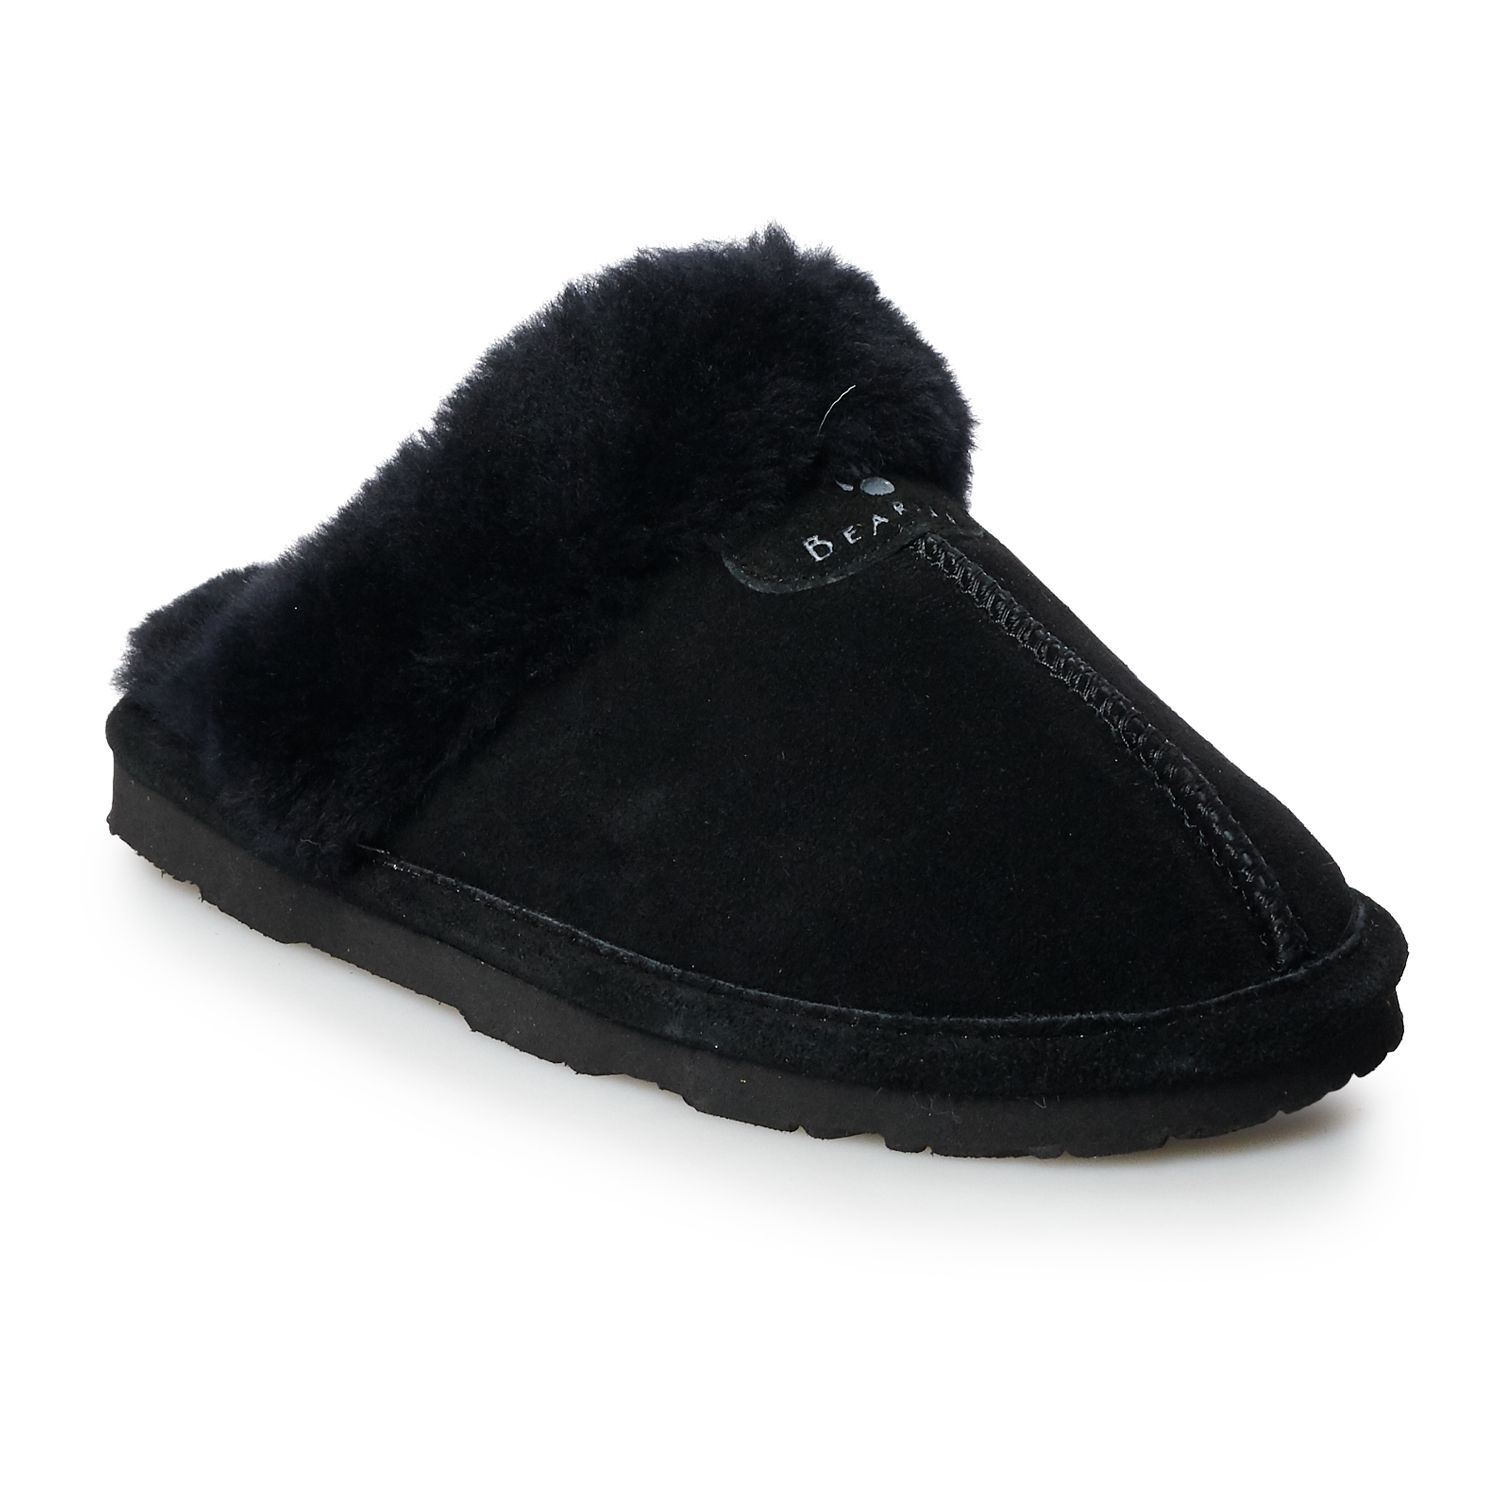 womens slipper boots black